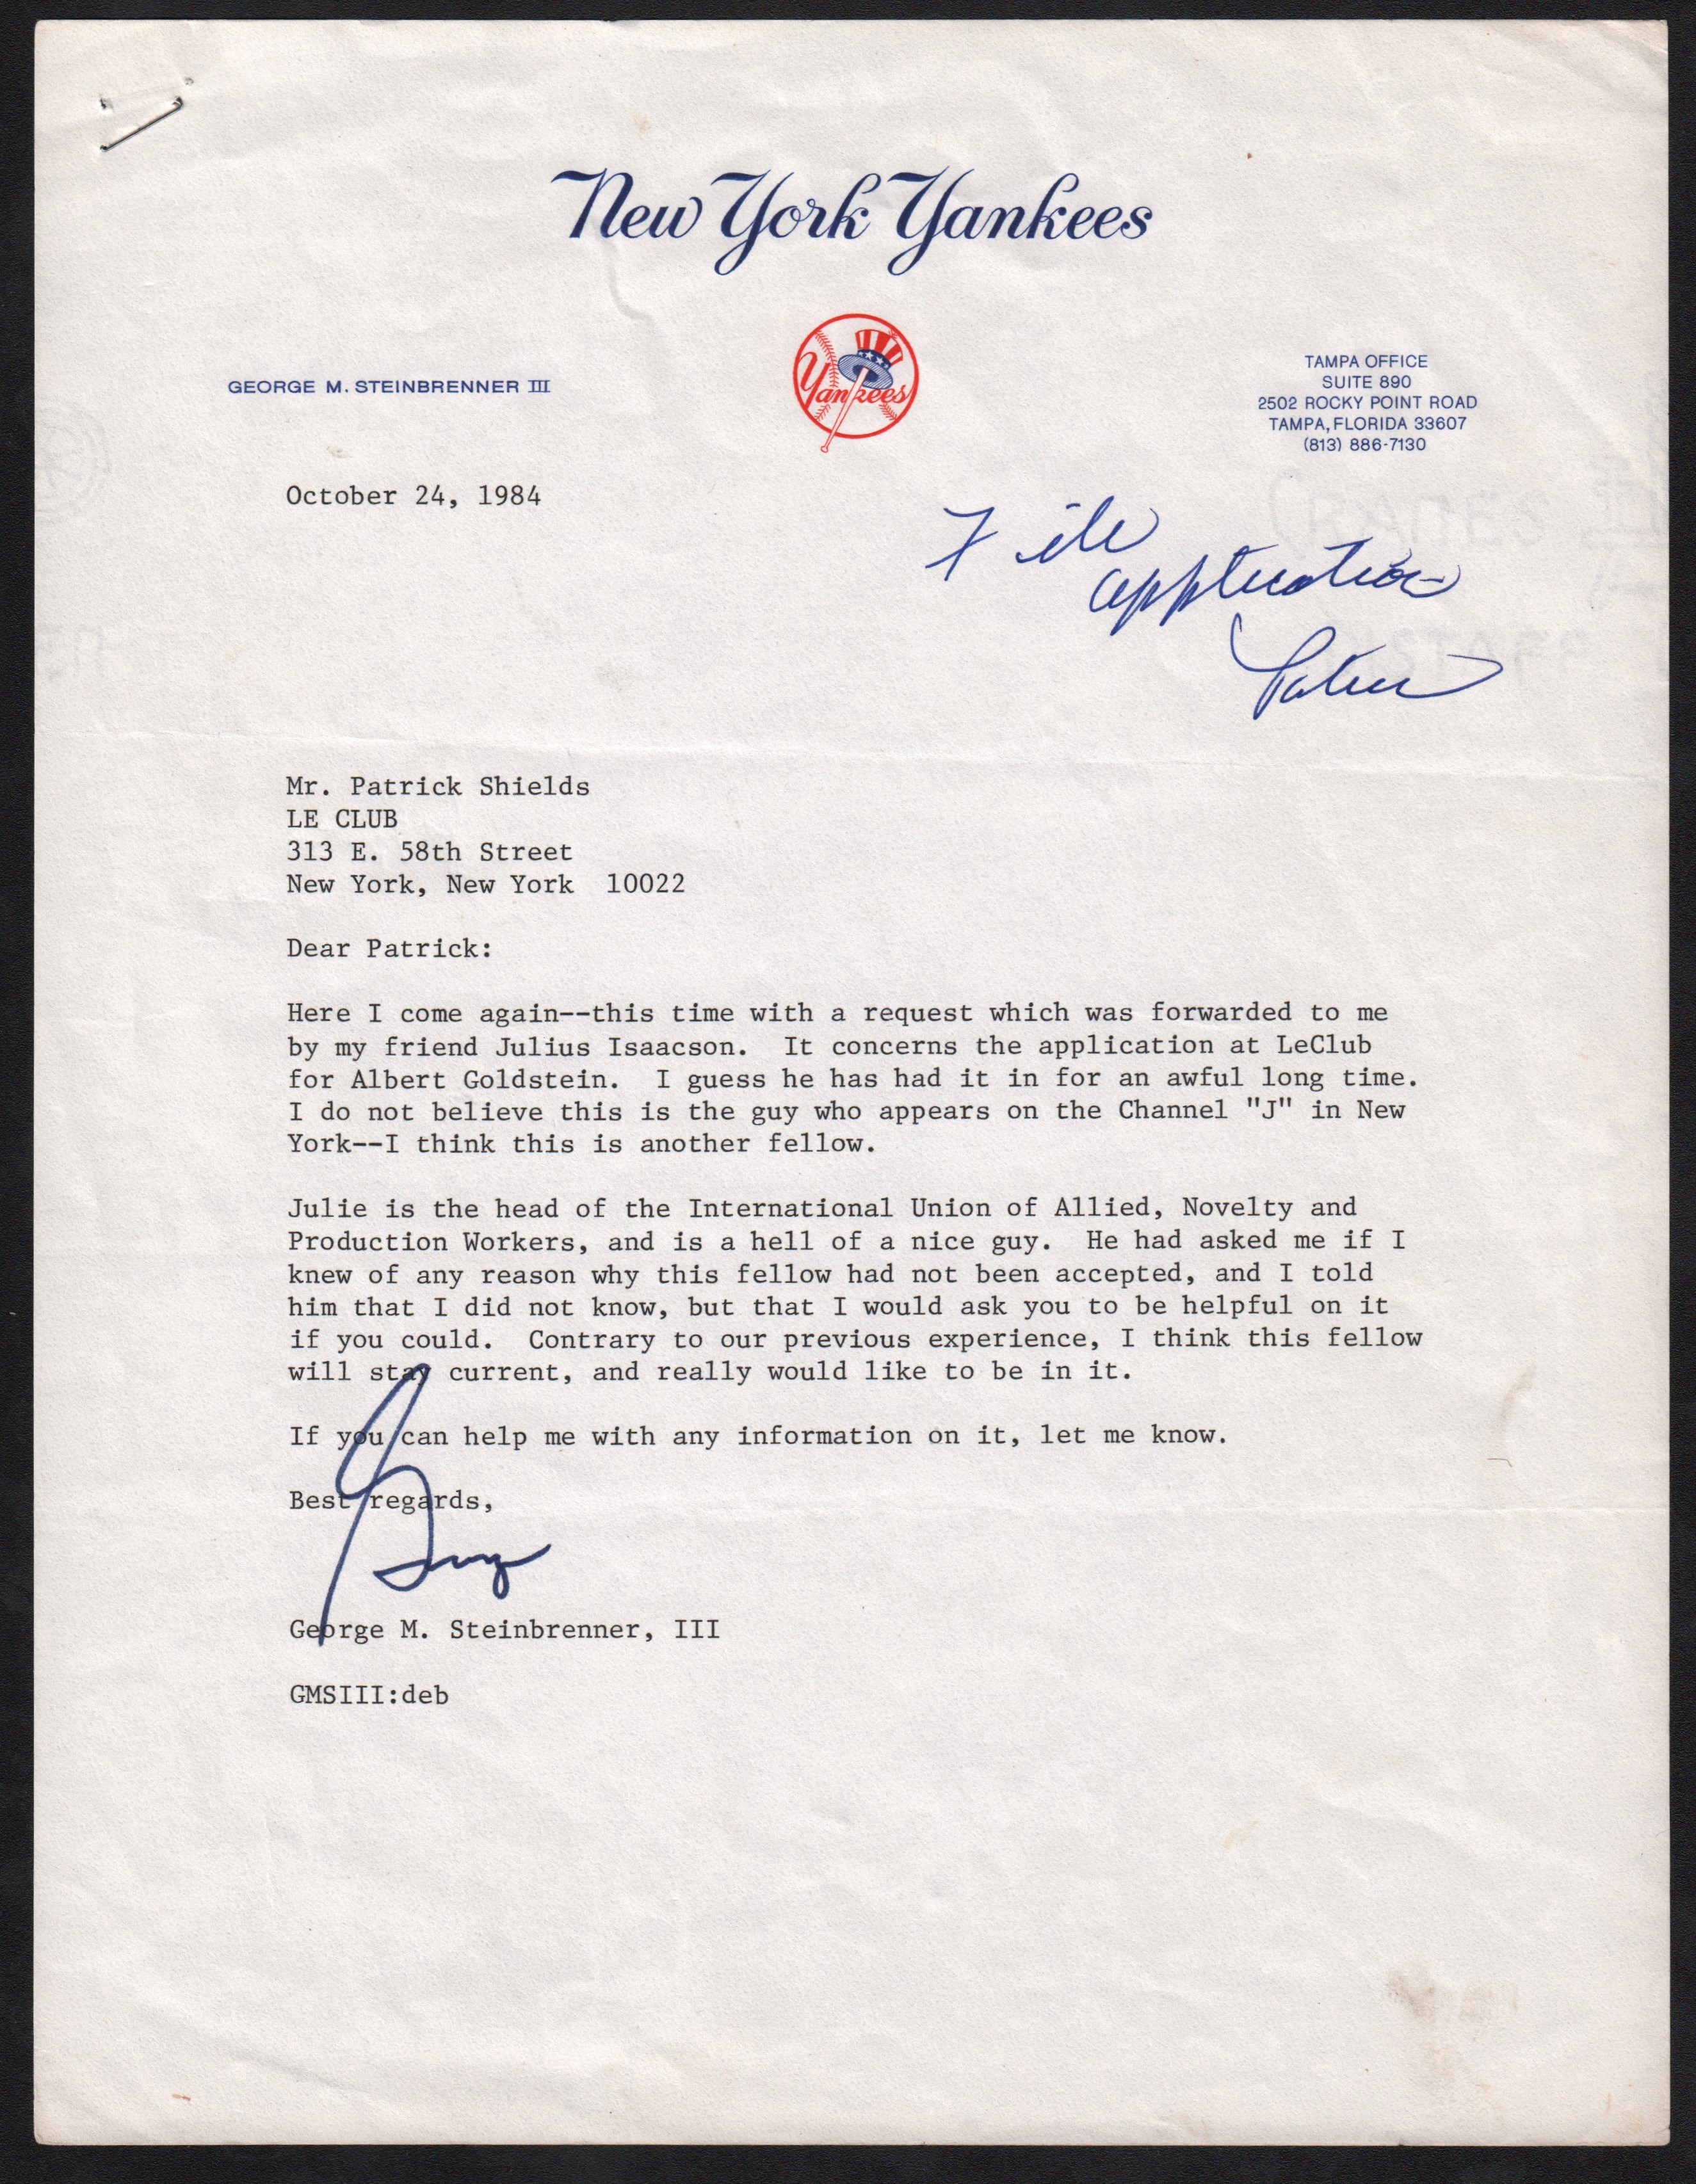 1984 George Steinbrenner Signed Letter on Yankees Stationary